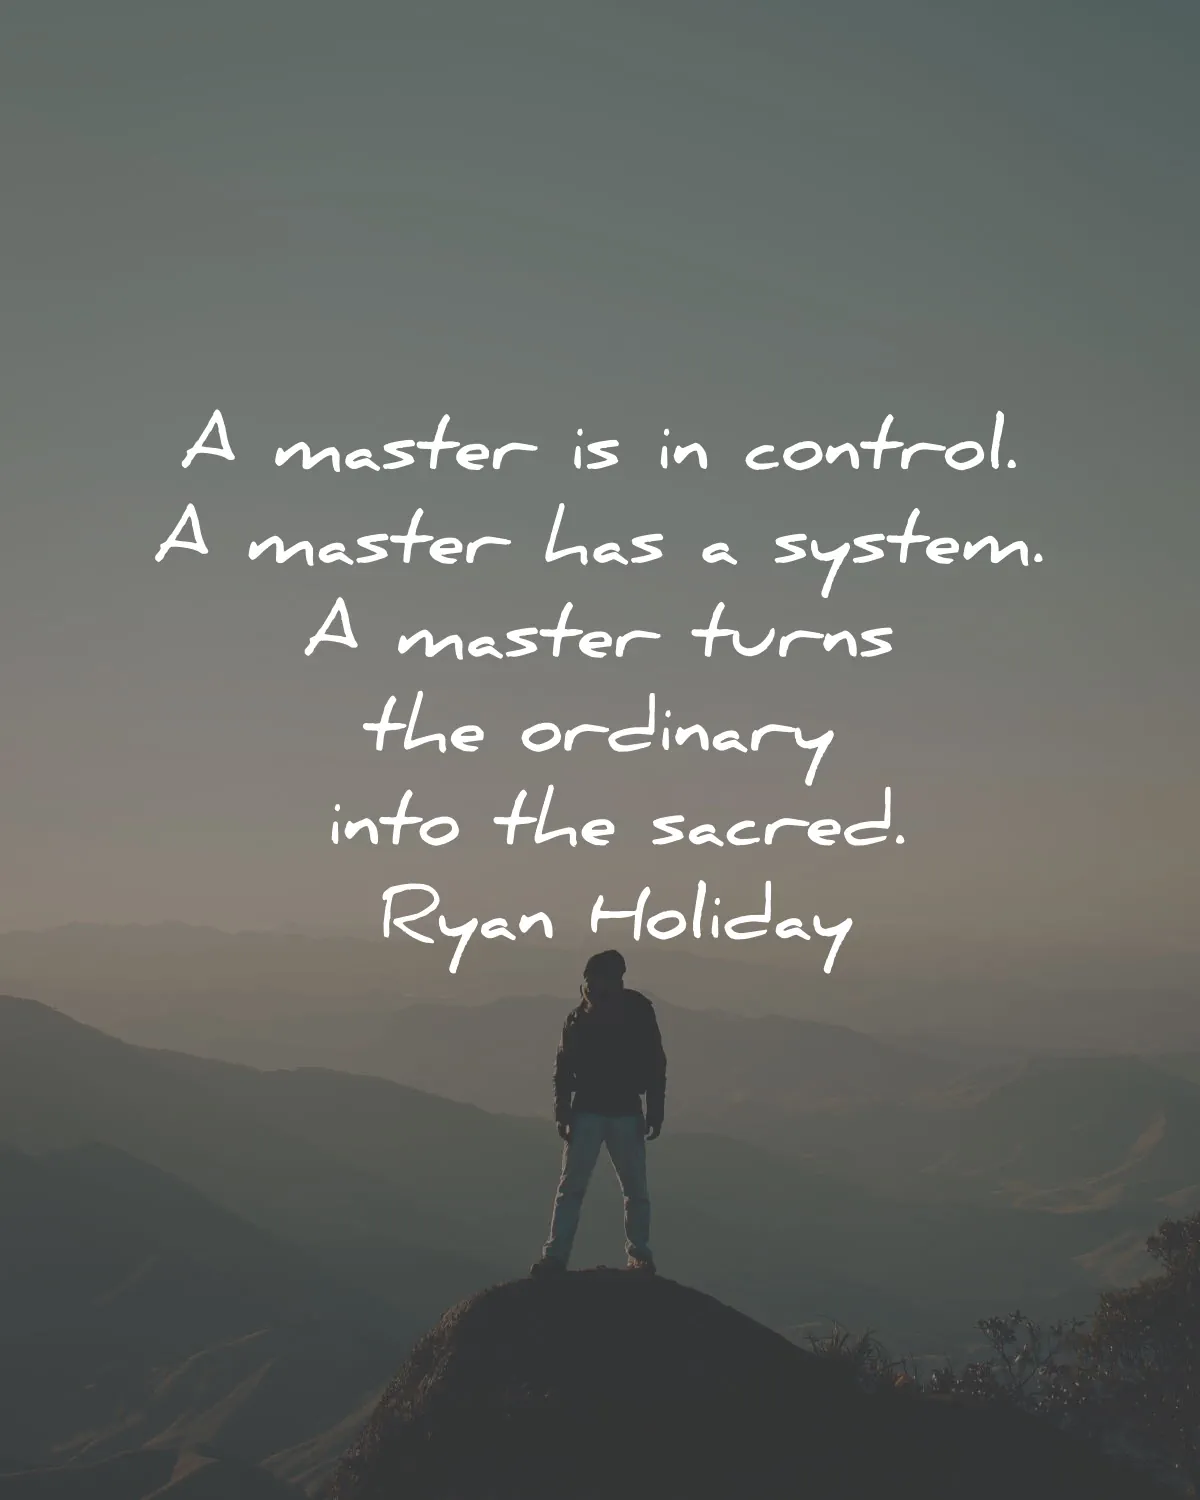 stillness is the key quotes summary ryan holiday master control system turns ordinary sacred wisdom